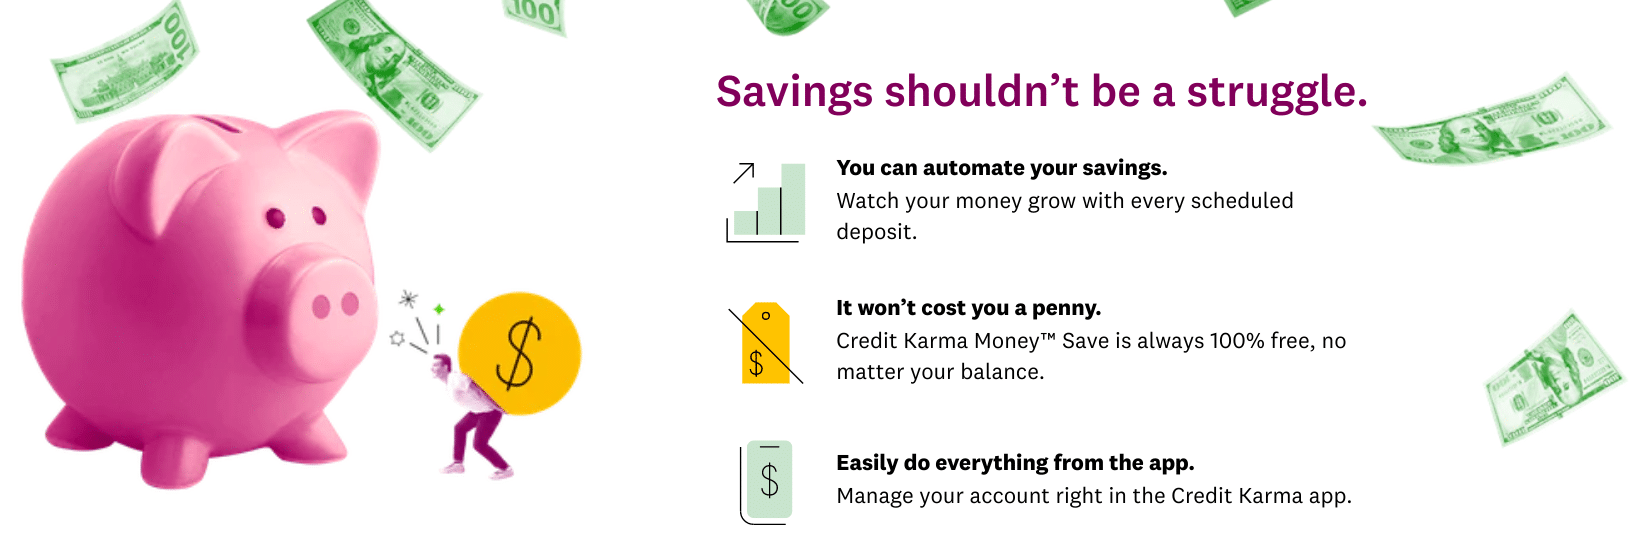 Credit Karma Money Savings